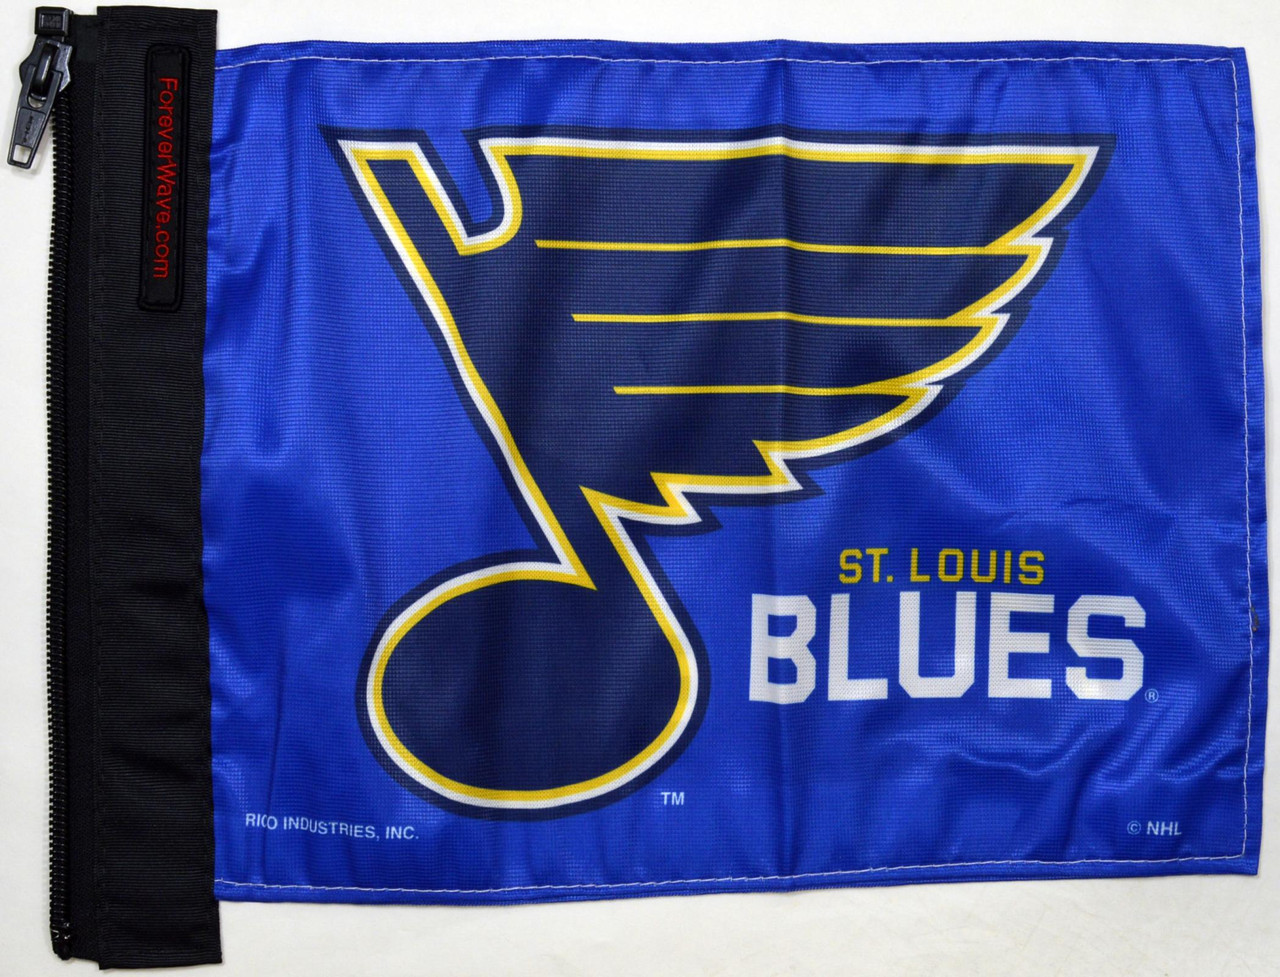 St. Louis Blues Car Flag - Blue